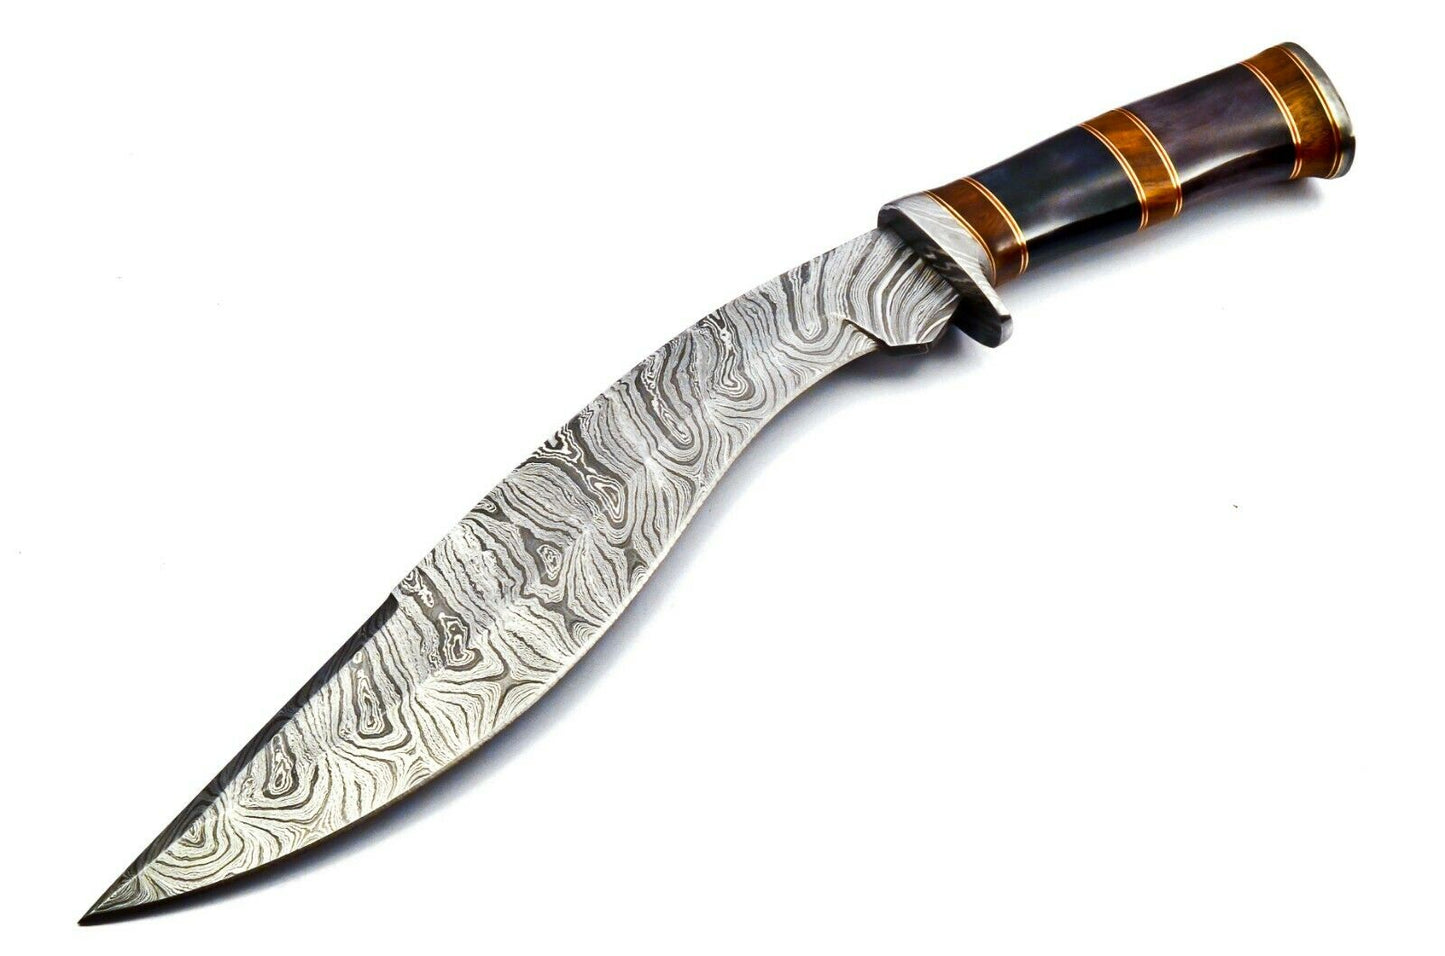 Handmade Damascus Heavy Duty KUKRI Knife Sharp Blade, With Leather Sheath 38cm